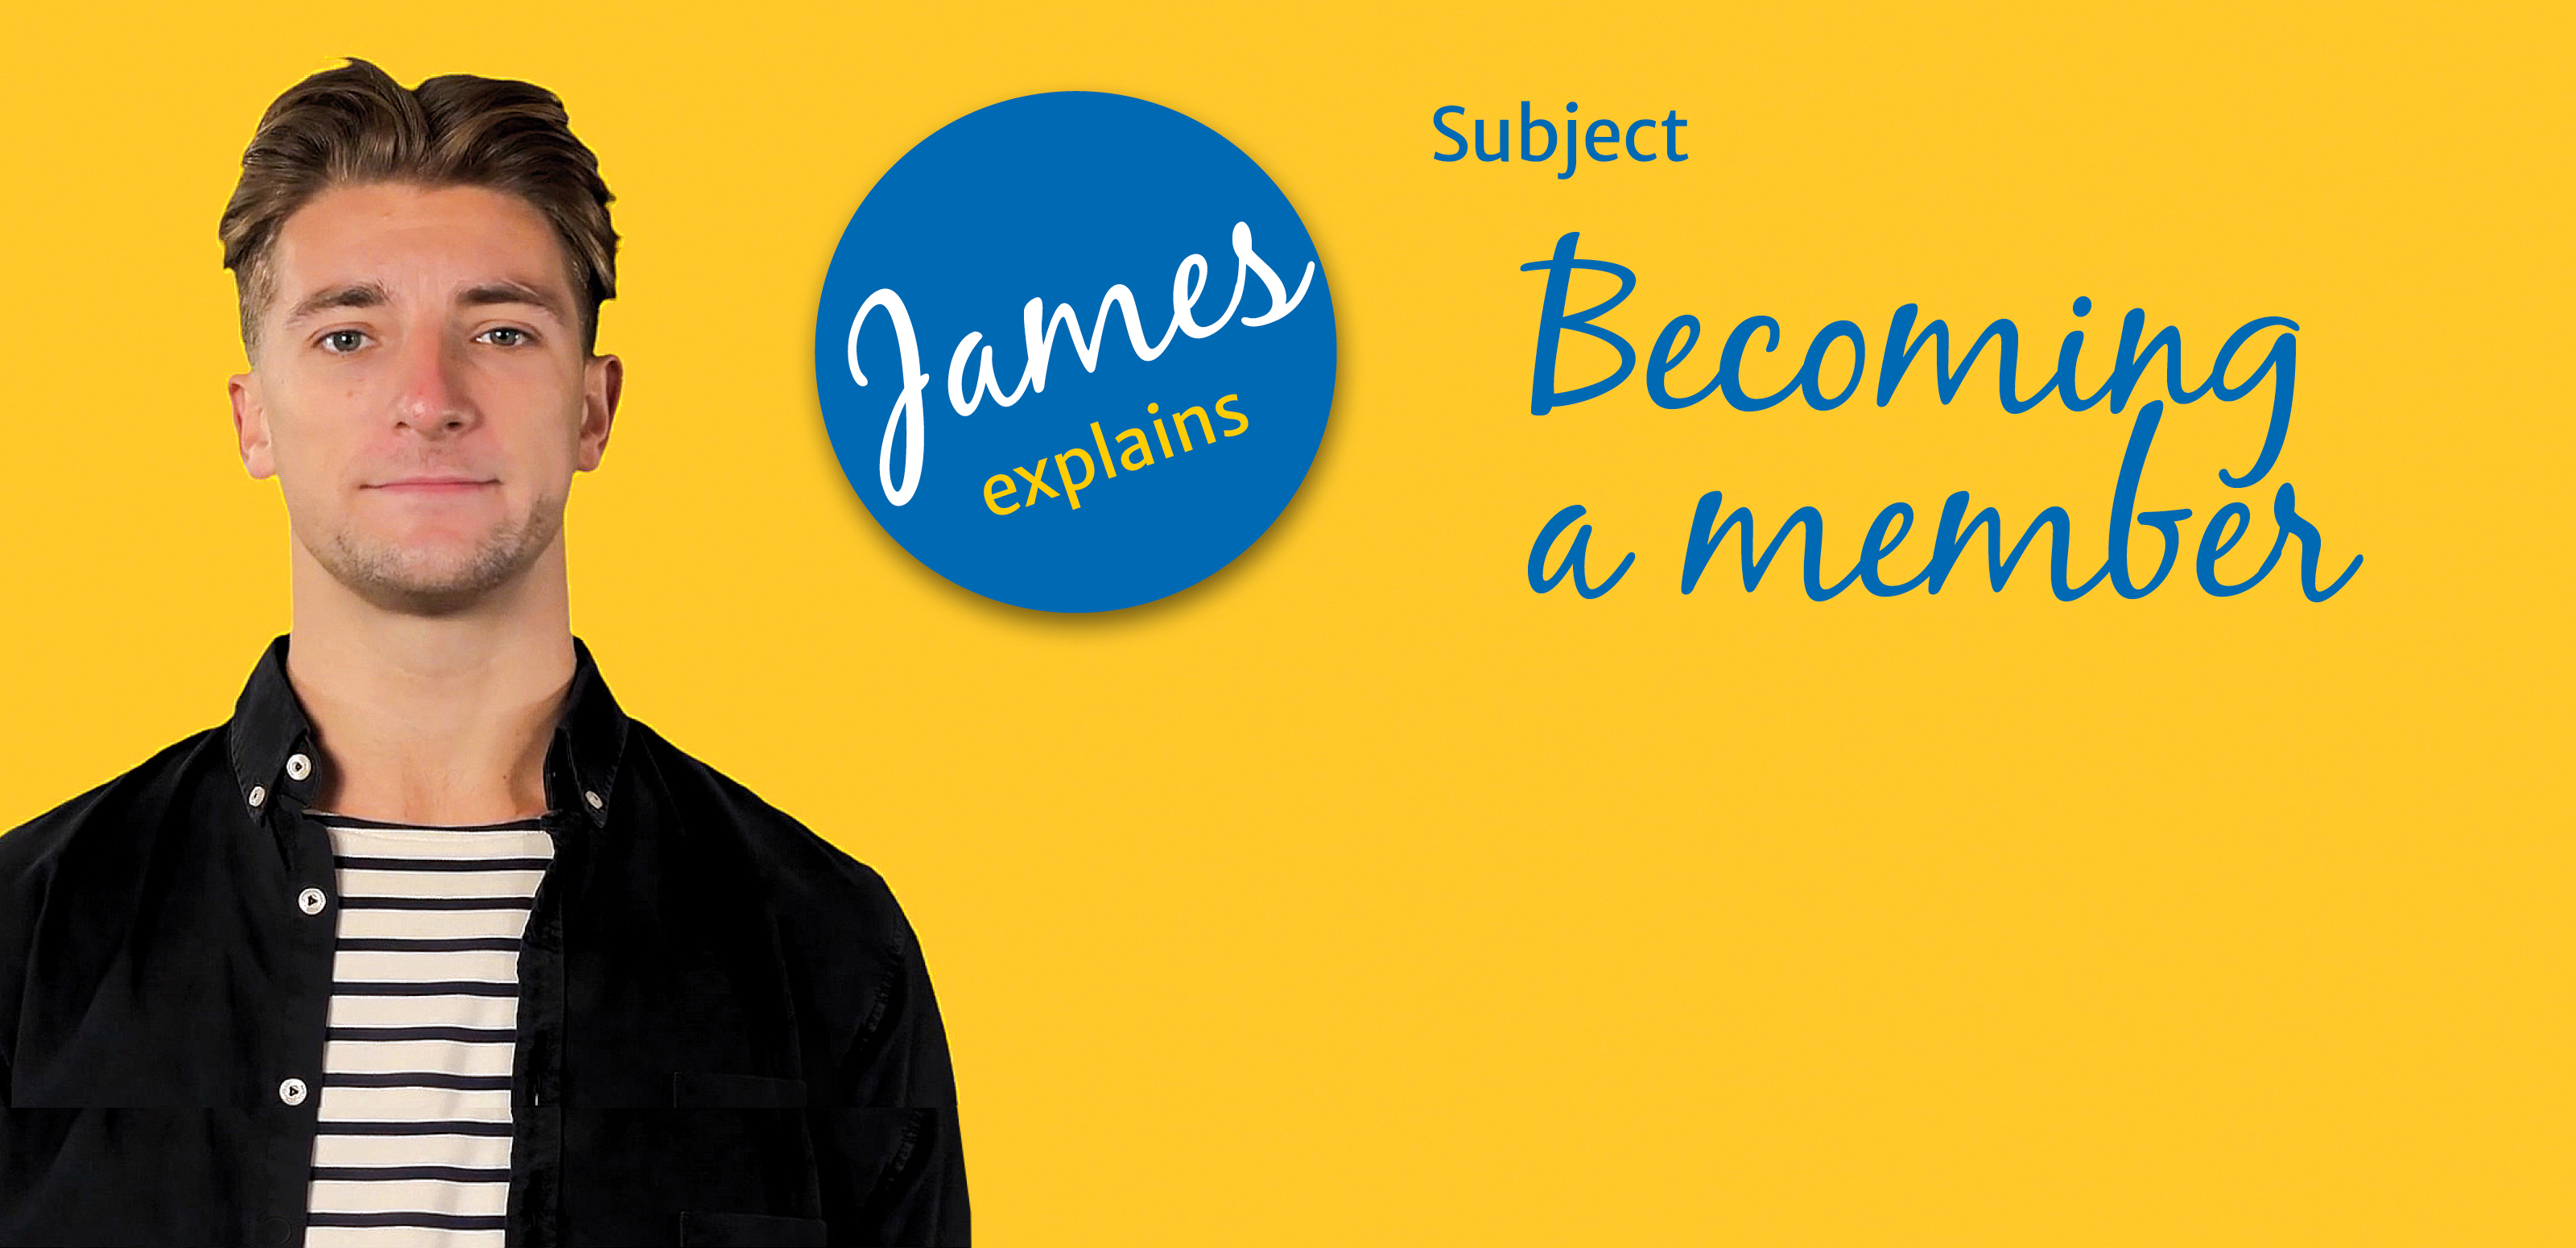 Digitaler Beratungsassistent James mit Text: James explains - Subject: Becoming a member